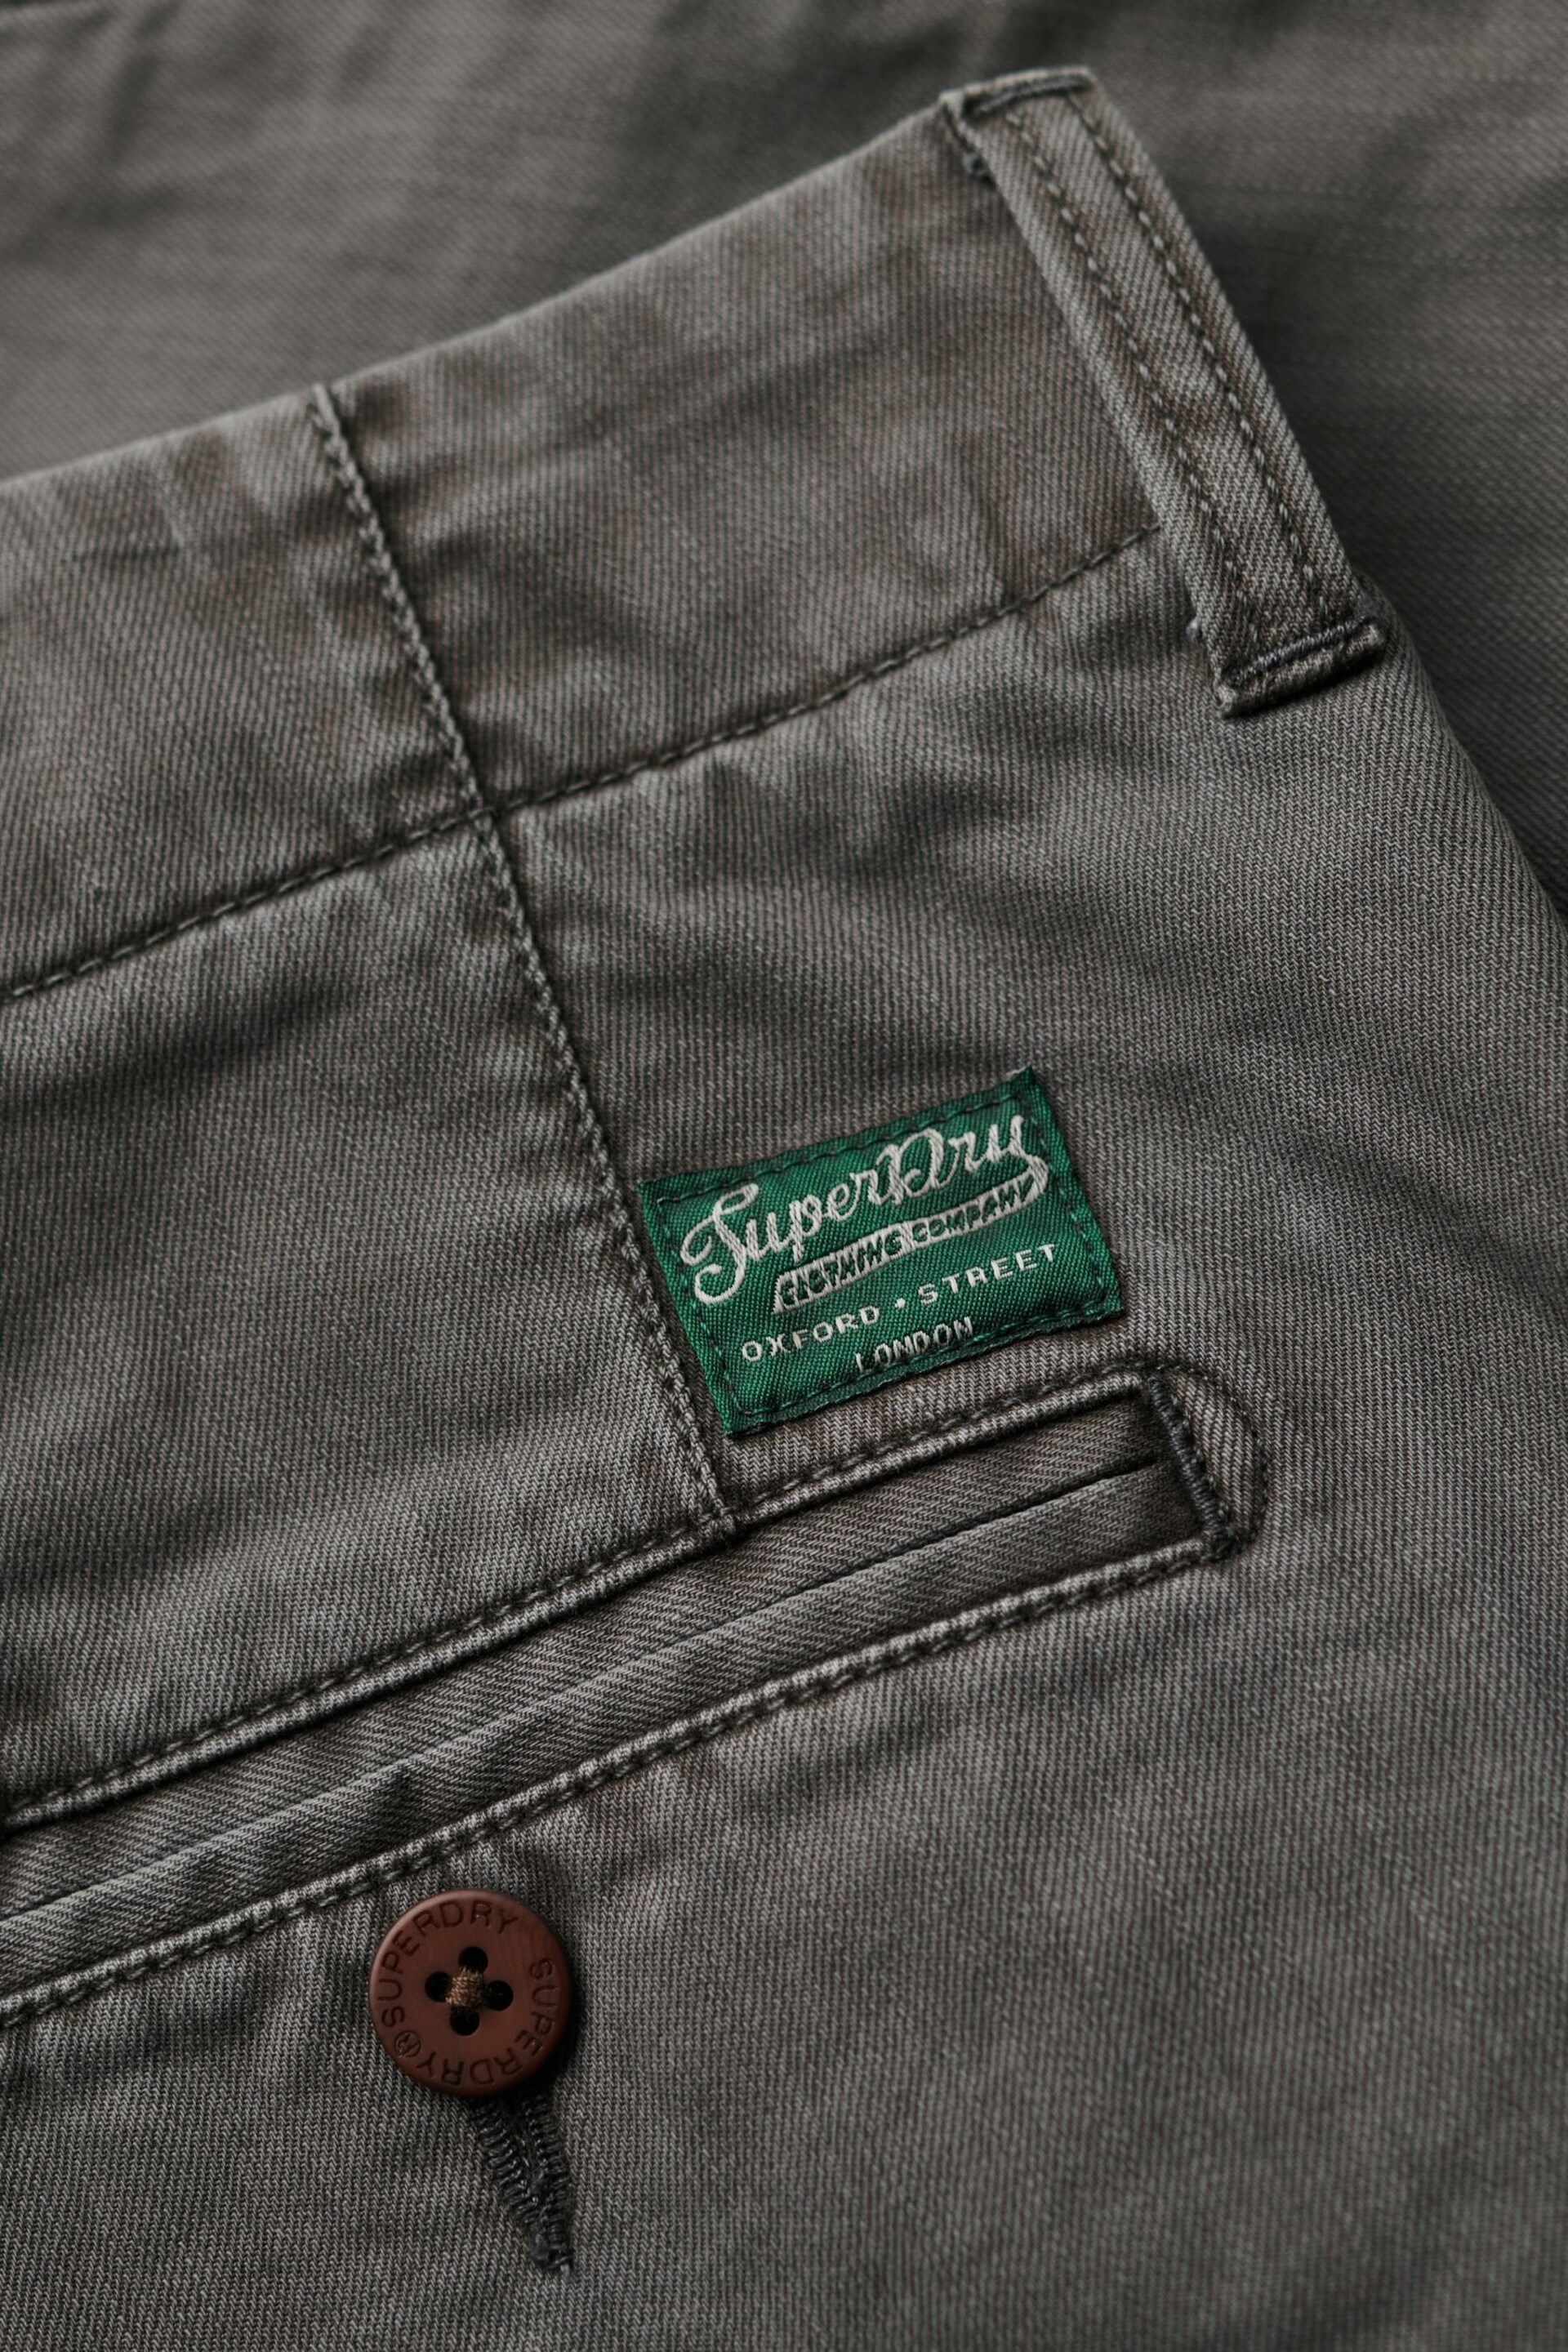 Superdry Grey Vintage International Shorts - Image 6 of 6